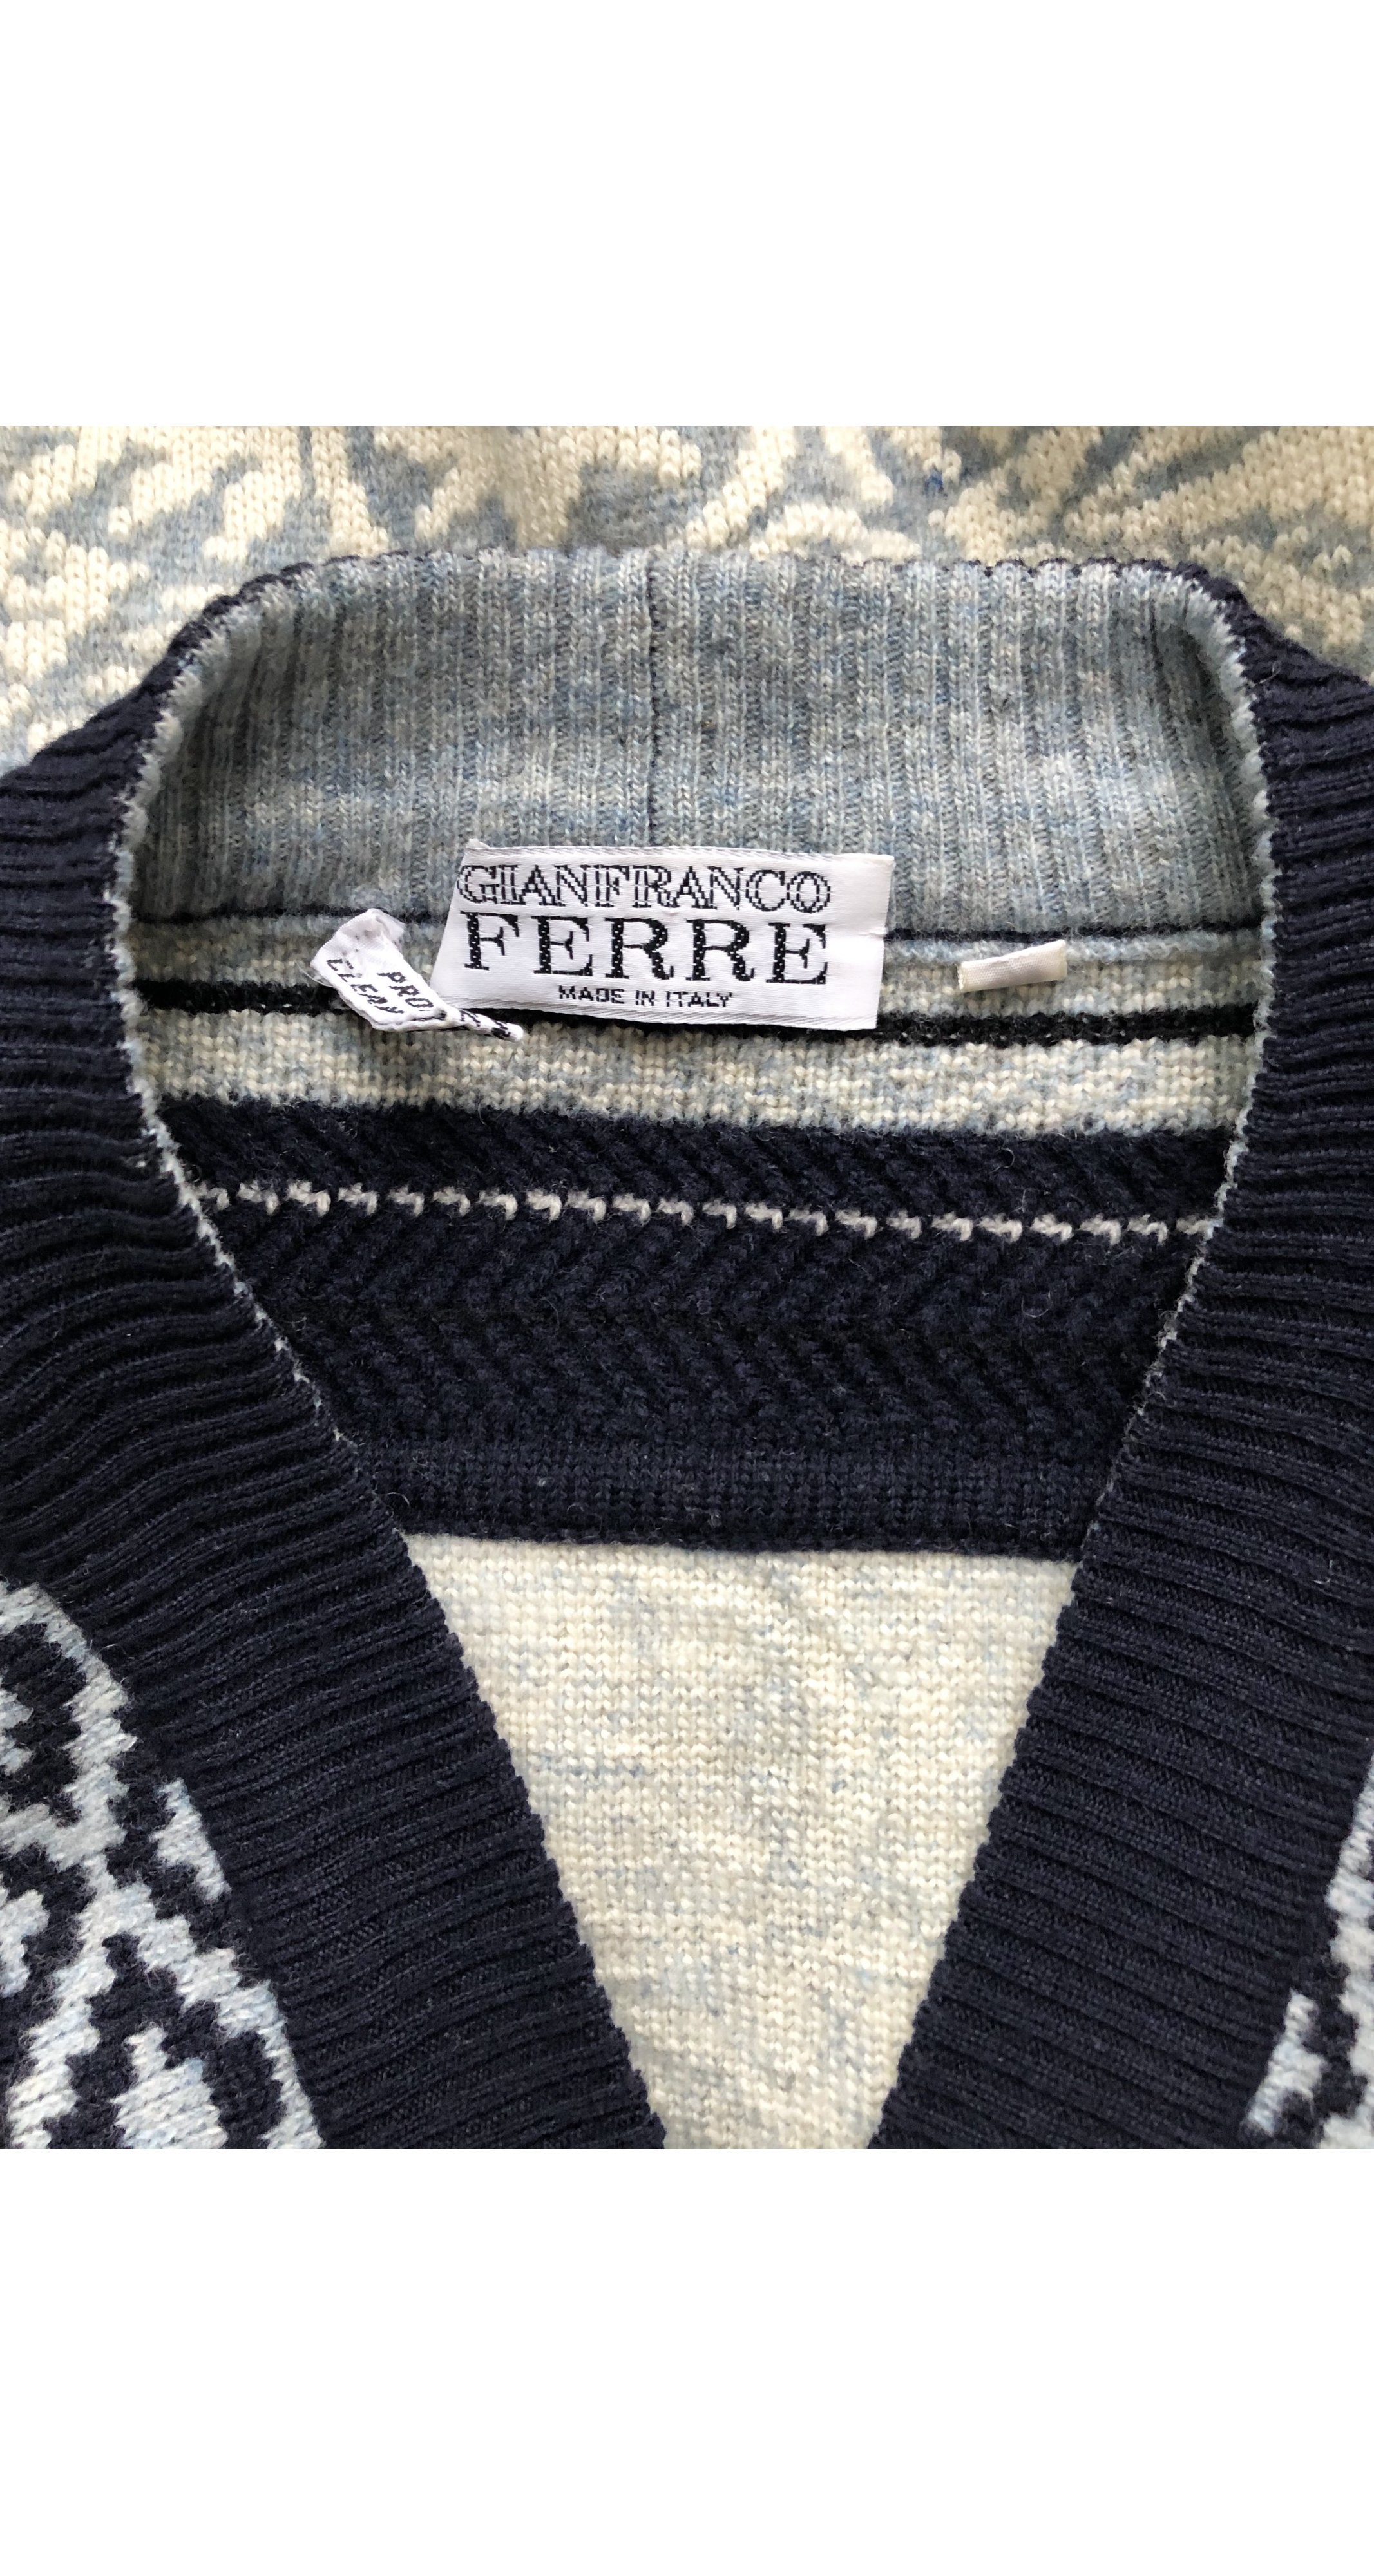 Gianfranco Ferré 1985 F/W Men's Nordic Inspired Pullover Sweater ...